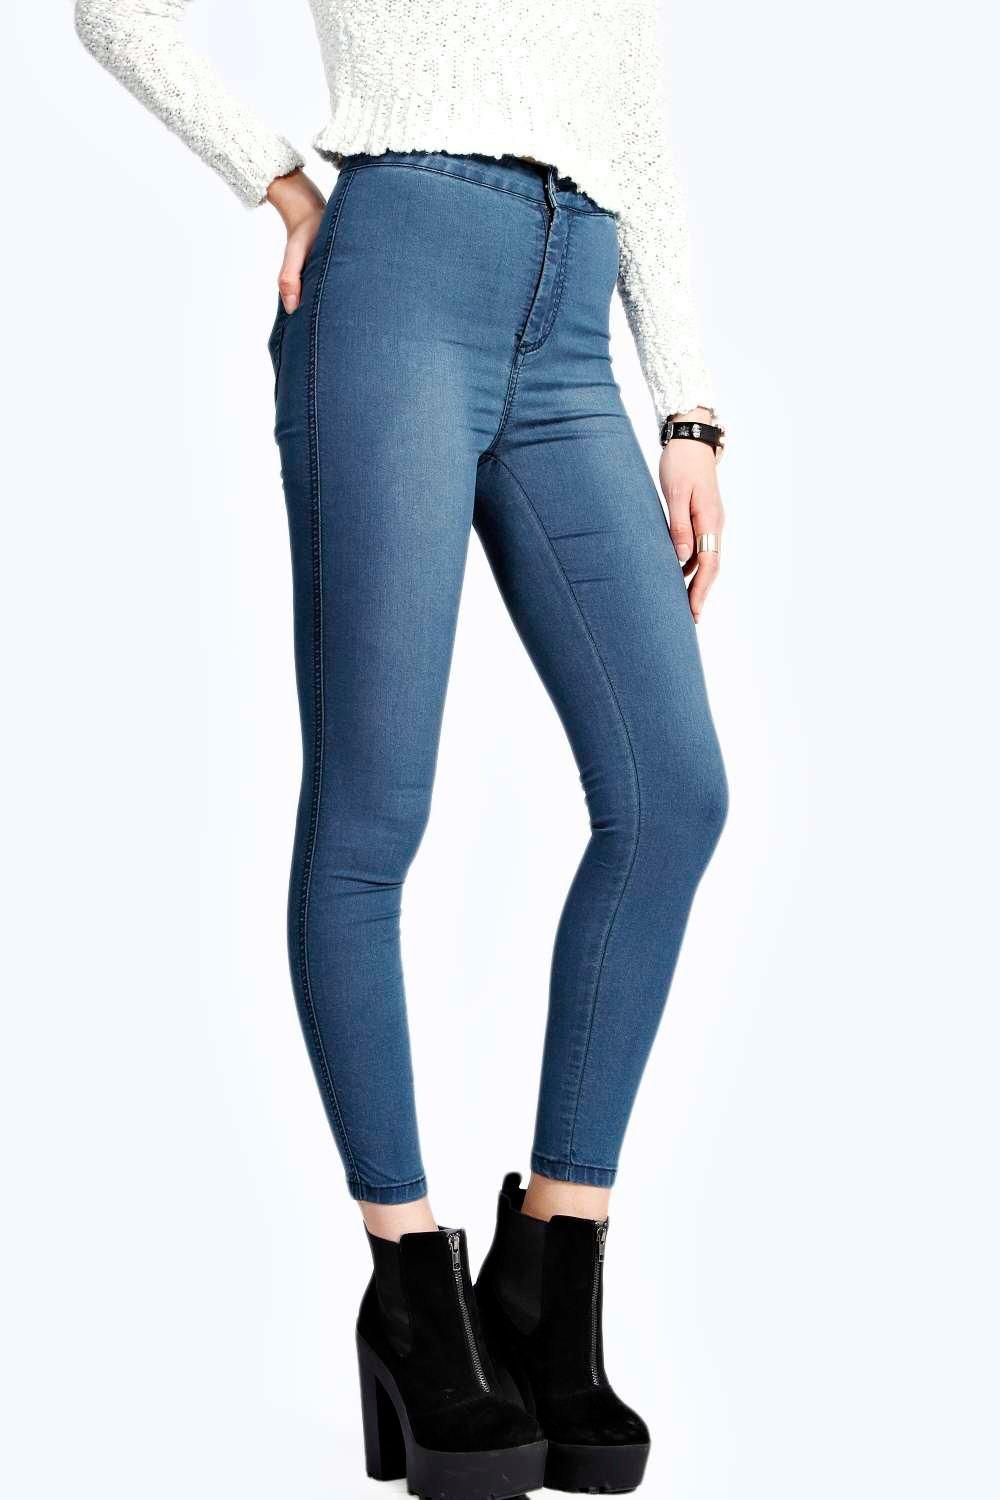 Lara Skinny Tube Jeans at boohoo.com